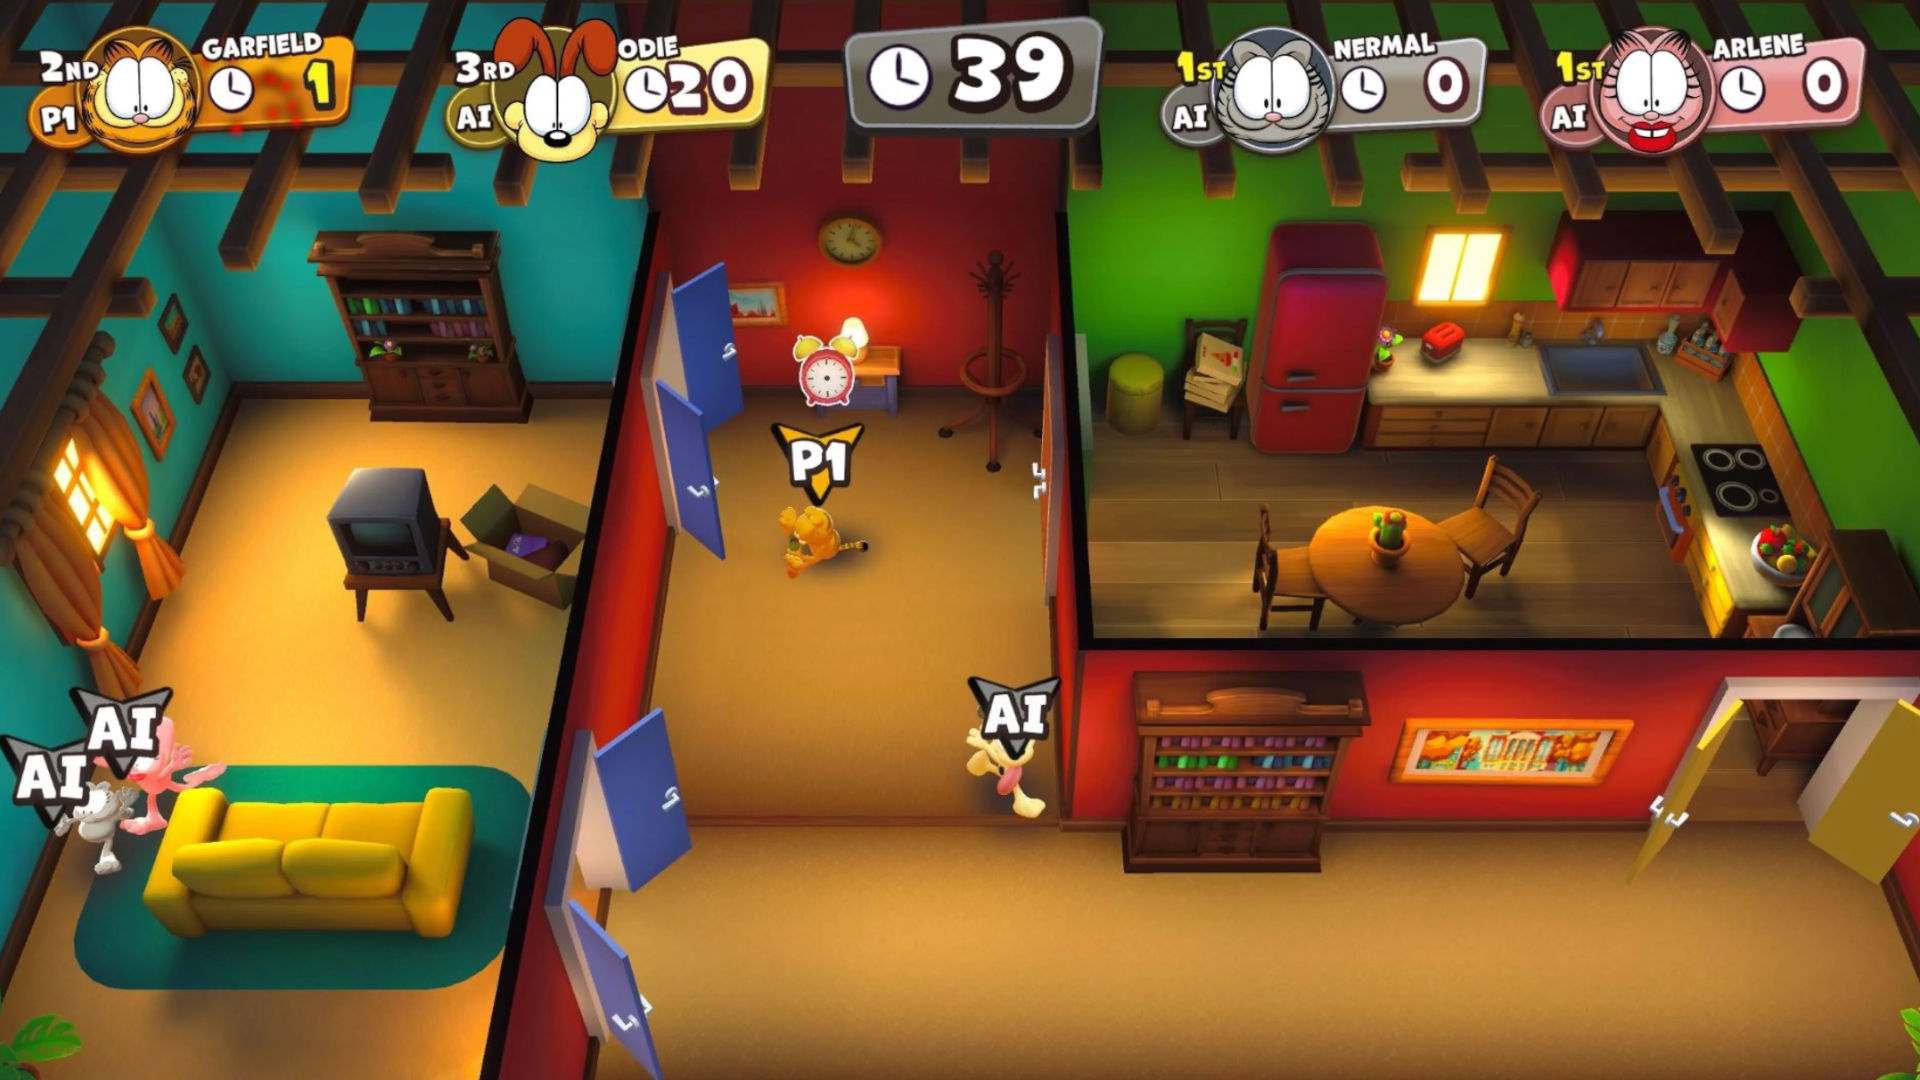 Garfield Lasagna Party for Garfield ゲーム ガイドのハウス ハンティング パーティー ゲームのスクリーンショット